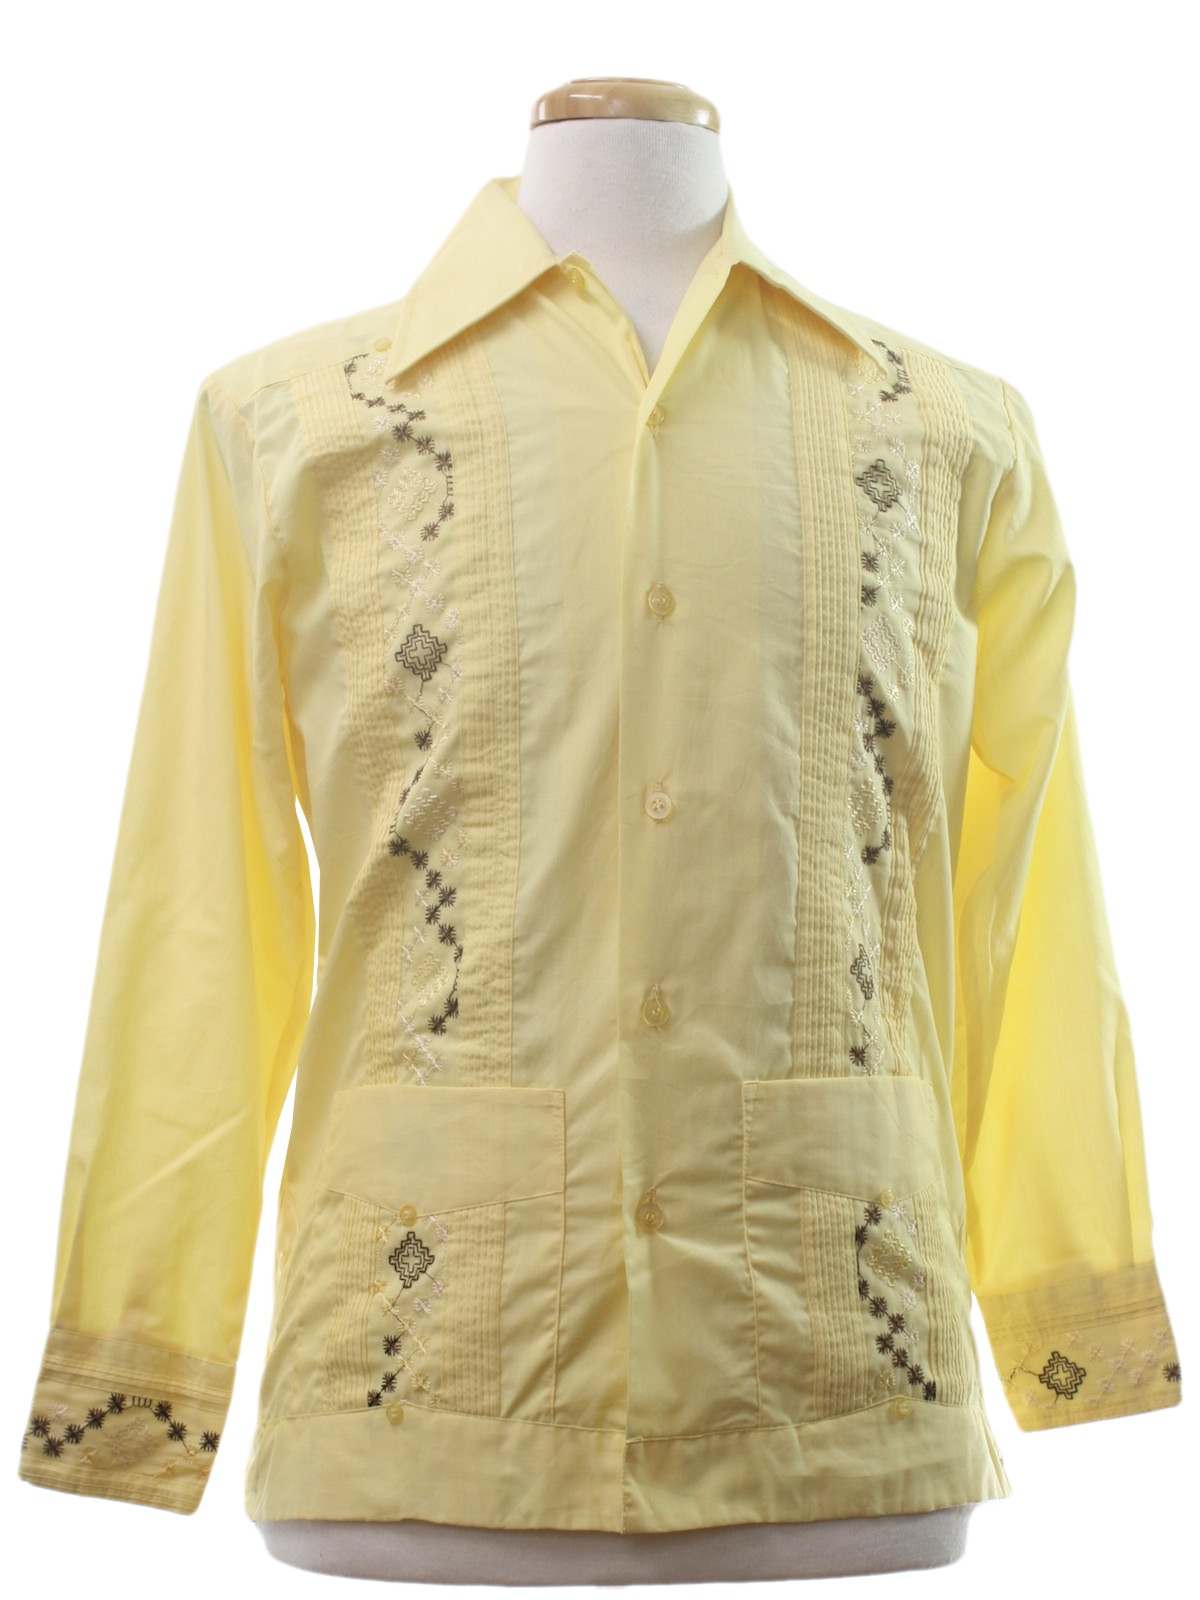 Retro 1970s Guayabera Shirt: 70s -Style Wise- Mens yellow background ...